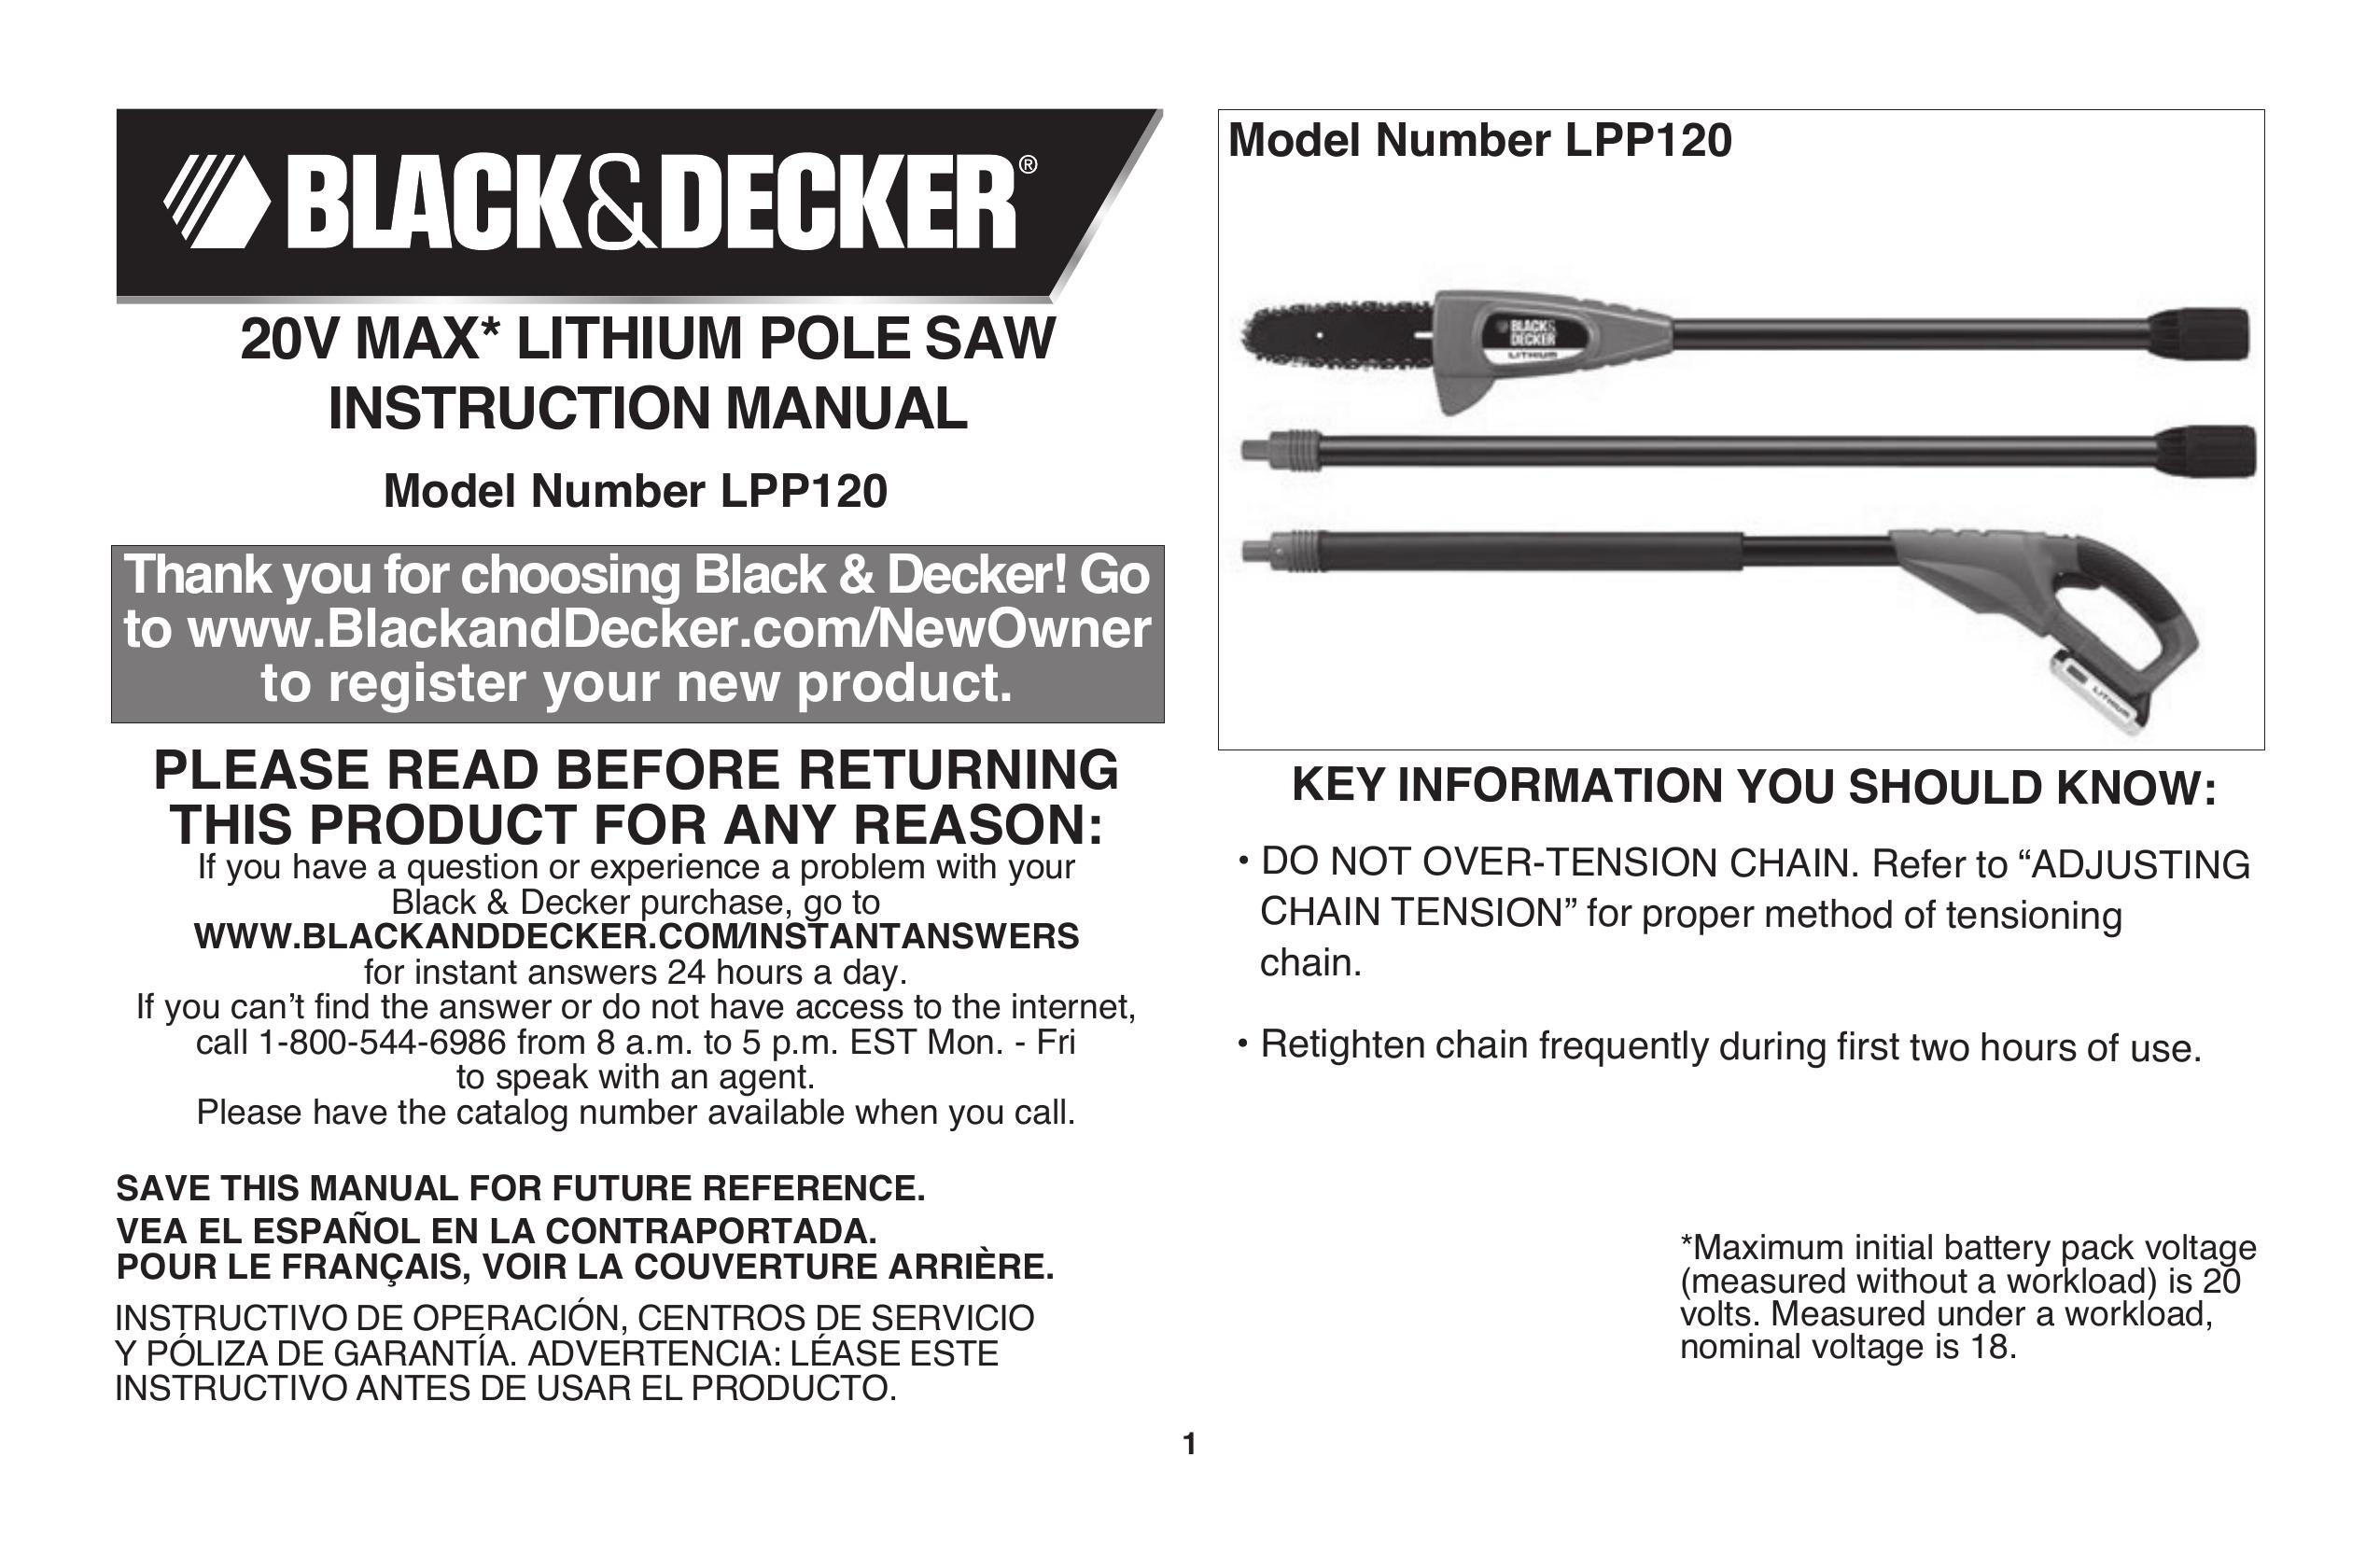 Black & Decker LPP120 Pole Saw User Manual